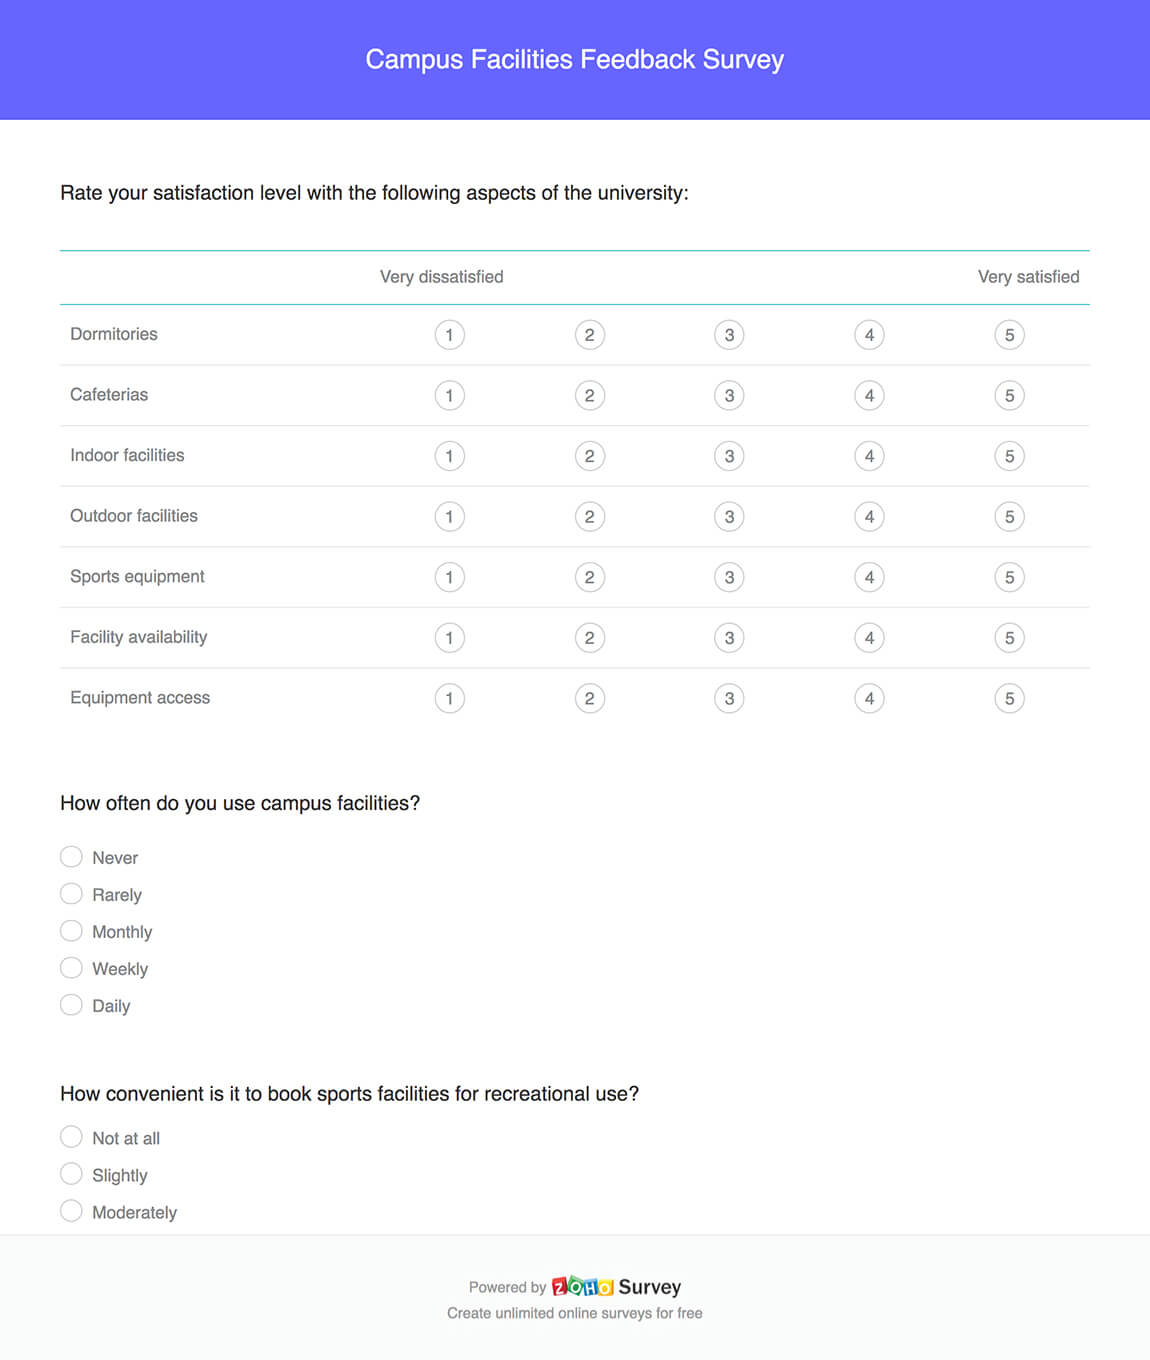 Campus facilities feedback survey questionnaire template